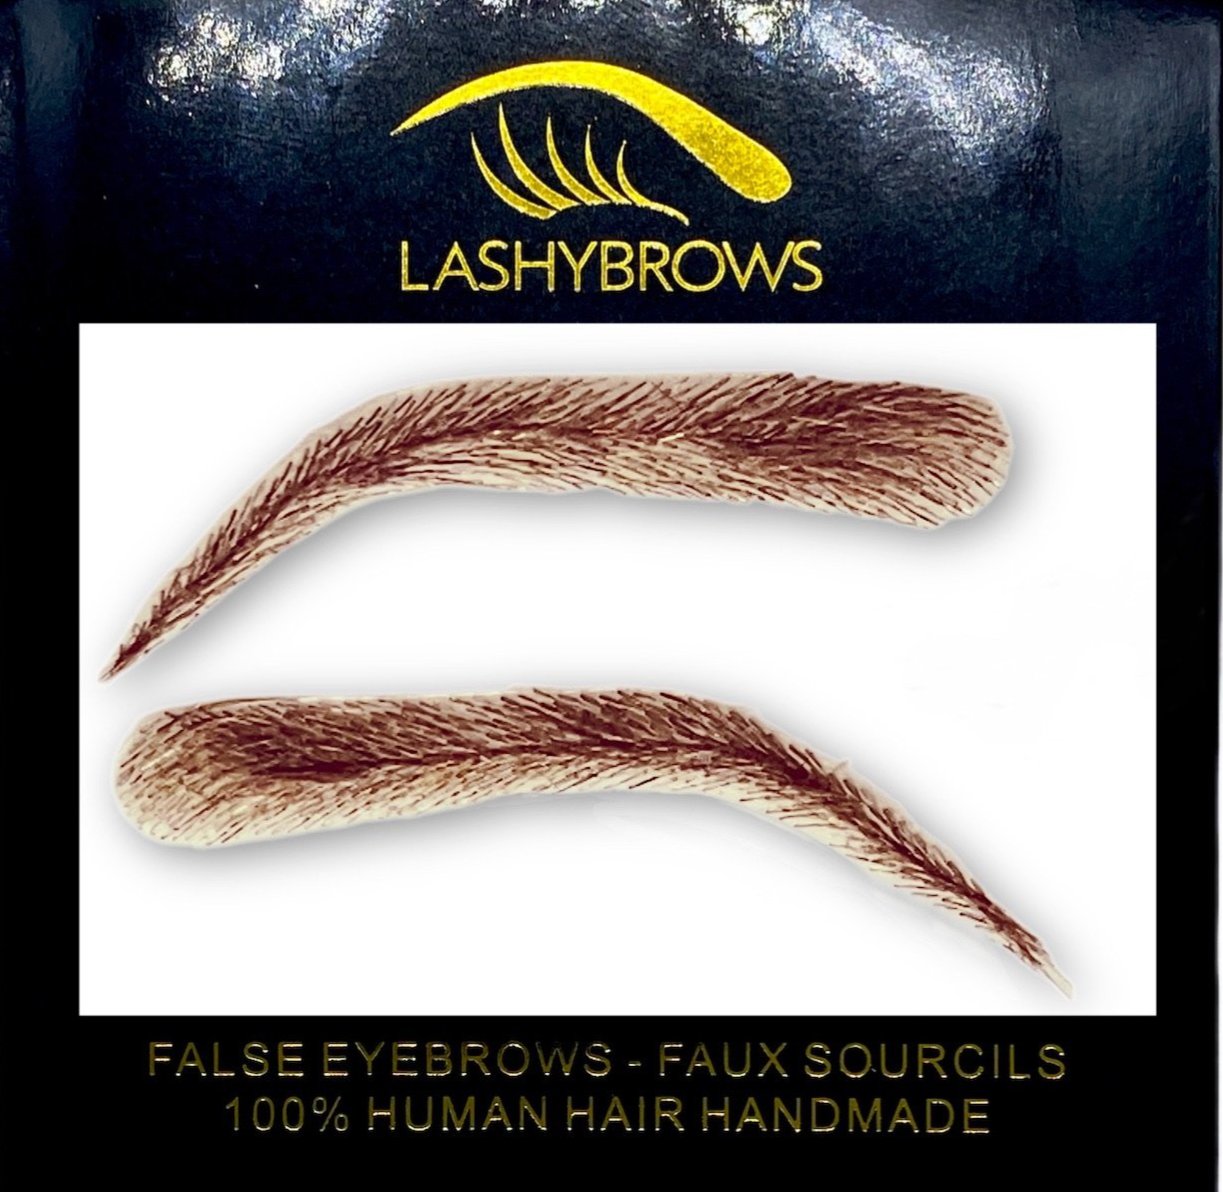 InstaBrows - Beyonce False Eyebrow